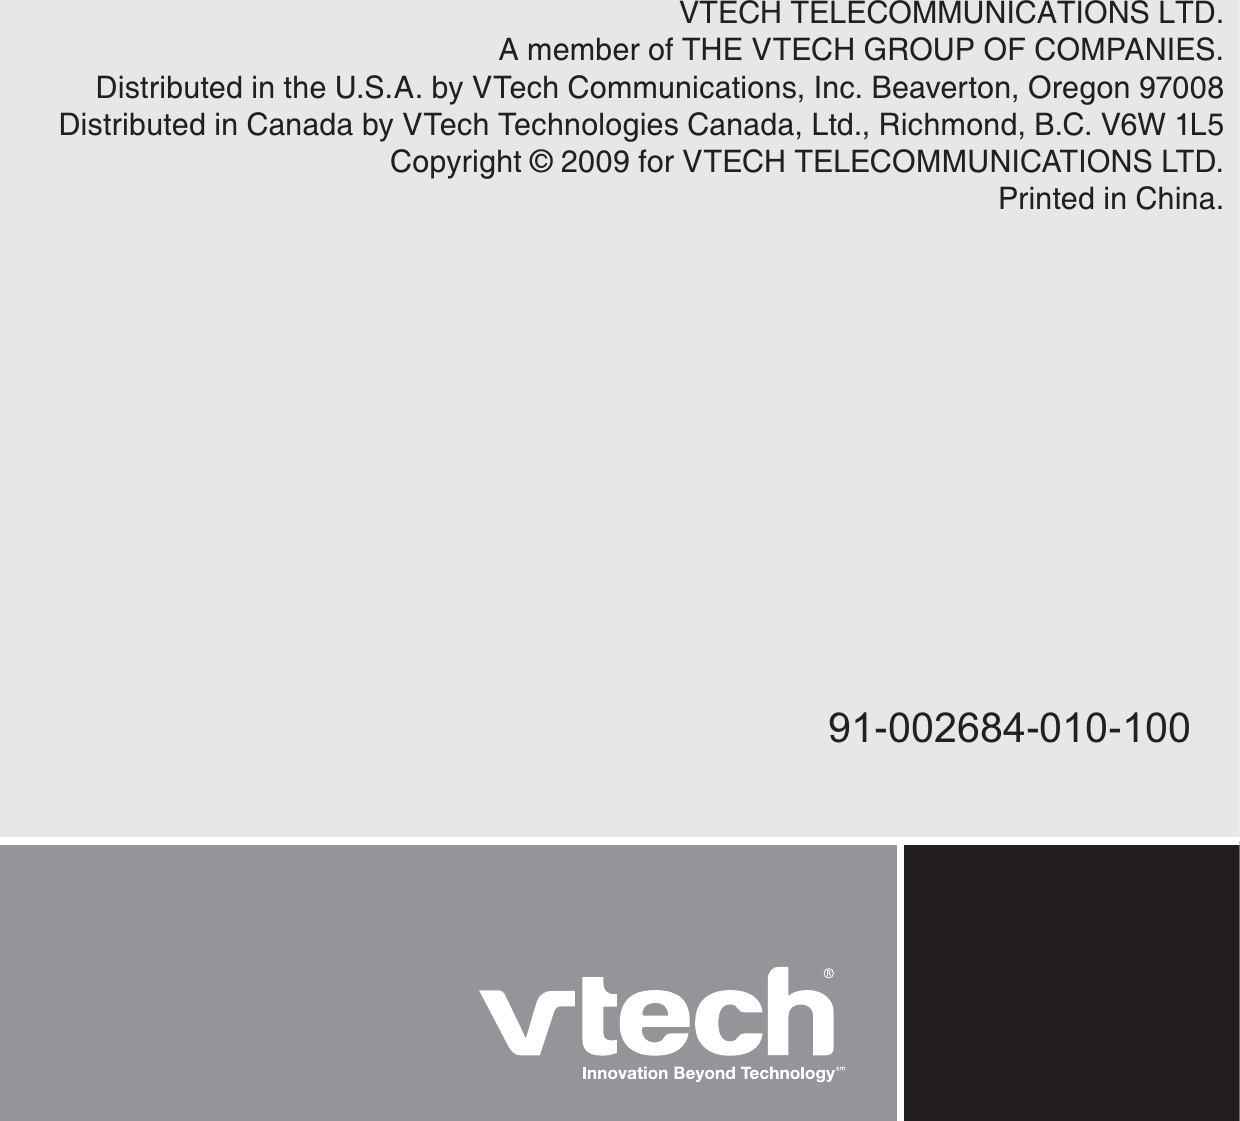 VTECH TELECOMMUNICATIONS LTD.A member of THE VTECH GROUP OF COMPANIES.Distributed in the U.S.A. by VTech Communications, Inc. Beaverton, Oregon 97008Distributed in Canada by VTech Technologies Canada, Ltd., Richmond, B.C. V6W 1L5Copyright © 2009 for VTECH TELECOMMUNICATIONS LTD.Printed in China.91-002684-010-100